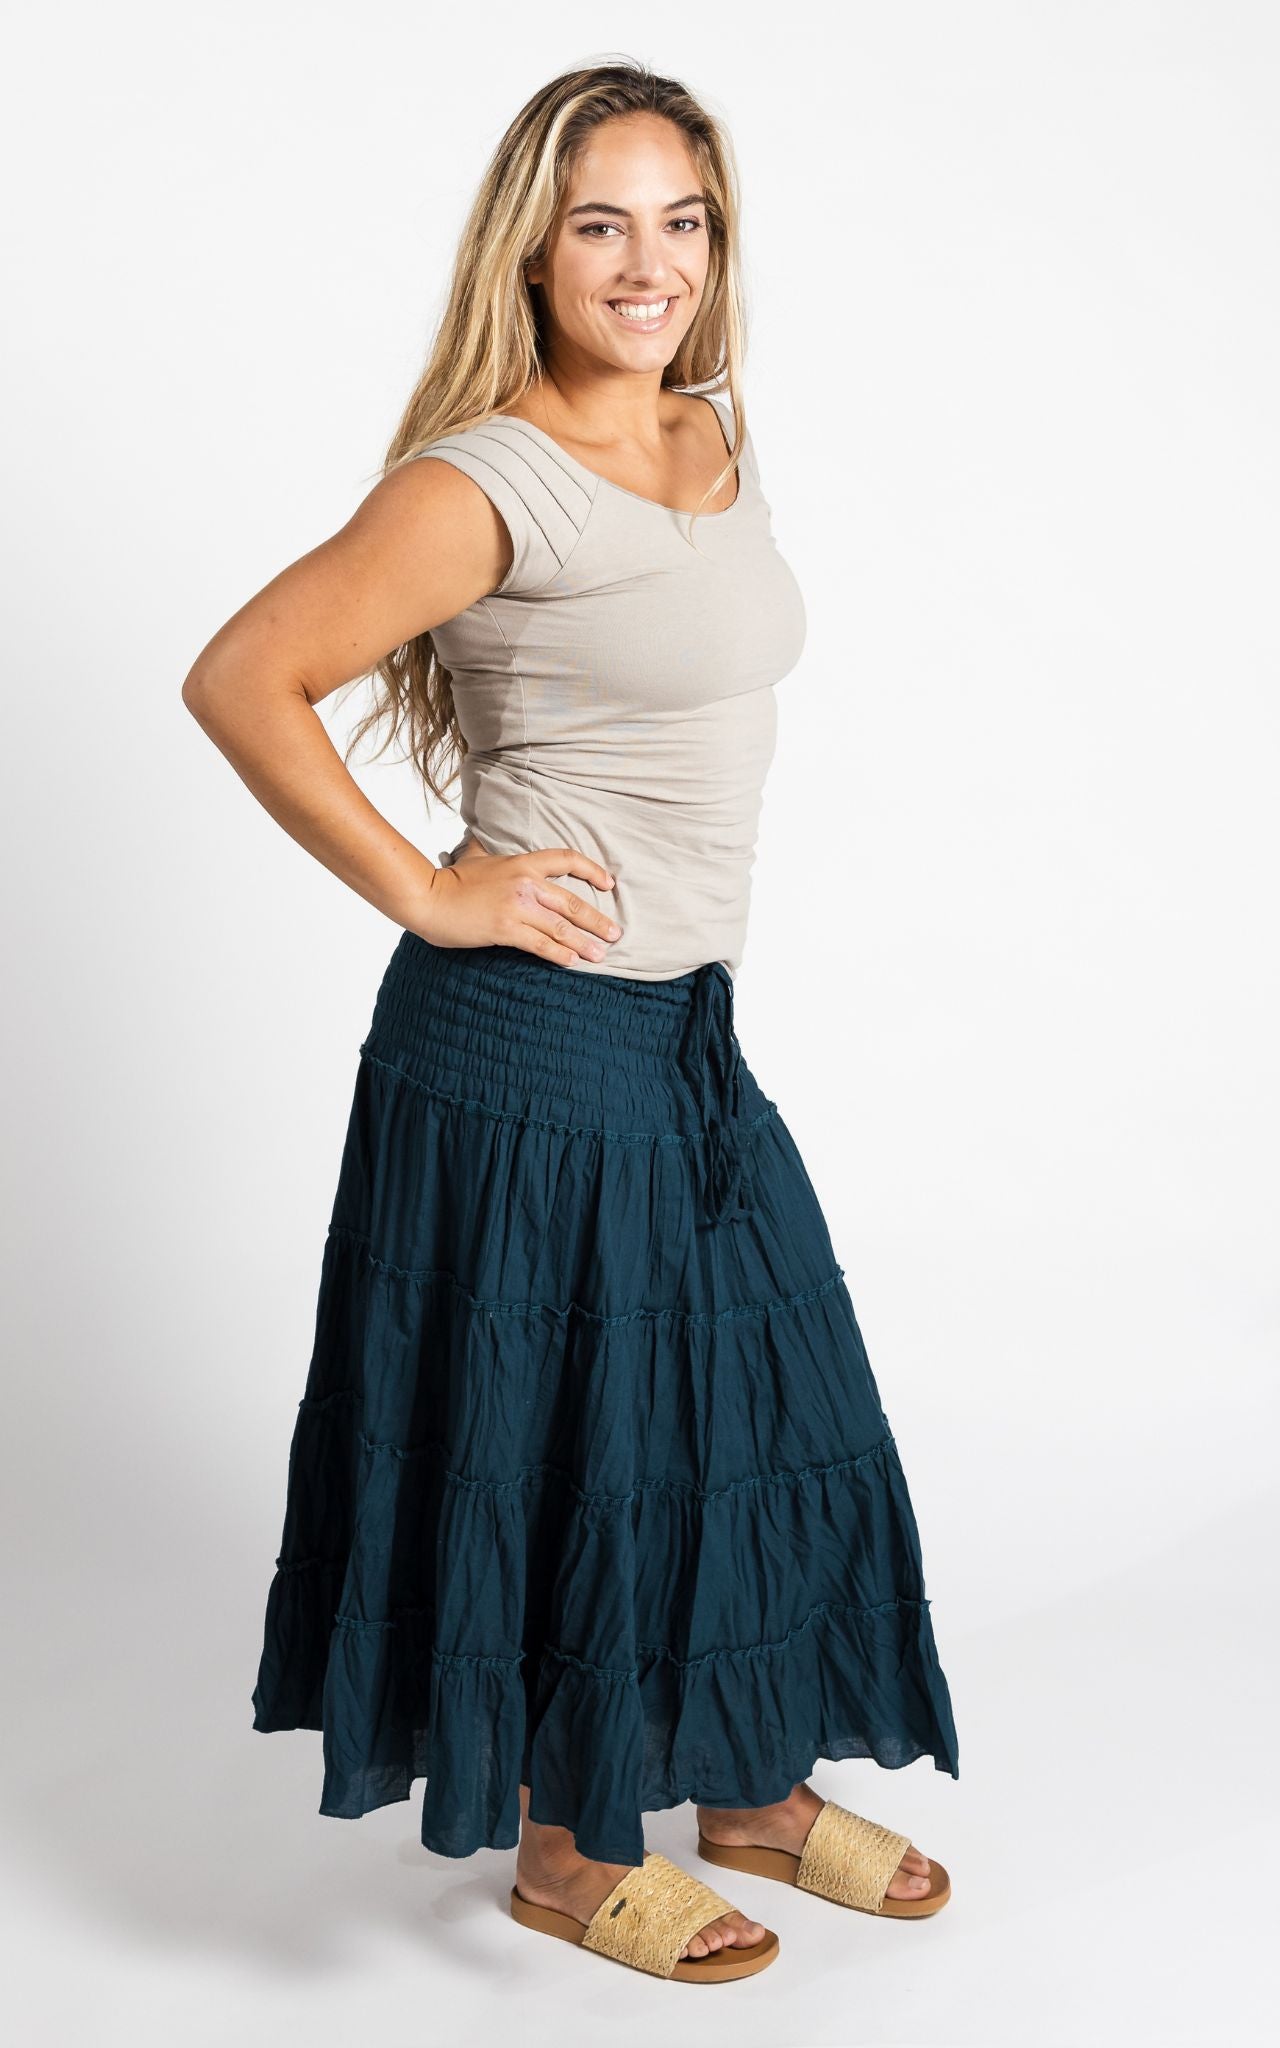 Surya Australia Ethical Cotton 'Franit' Skirt made in Nepal 